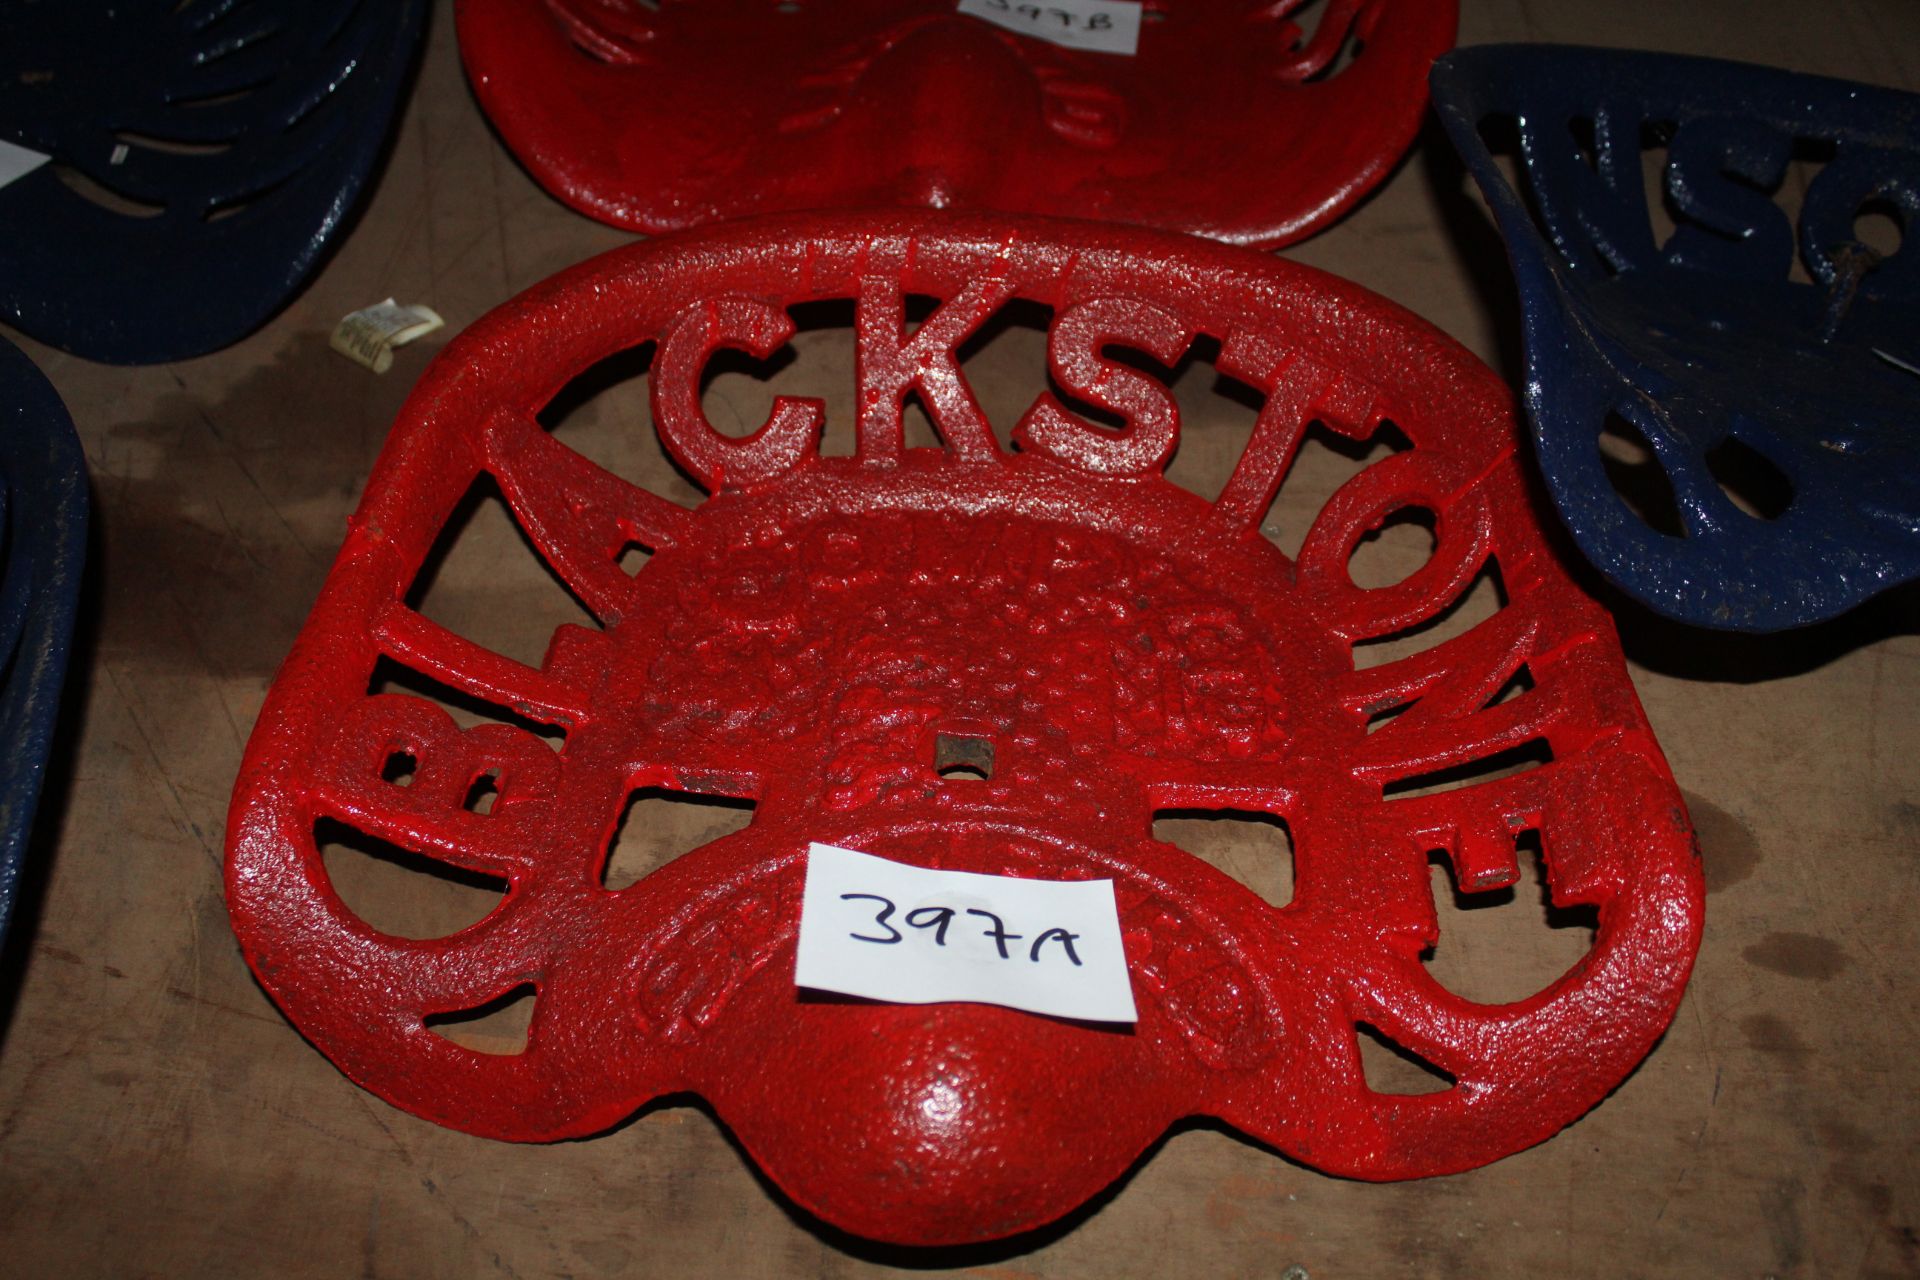 Blackstone cast iron implement seat.